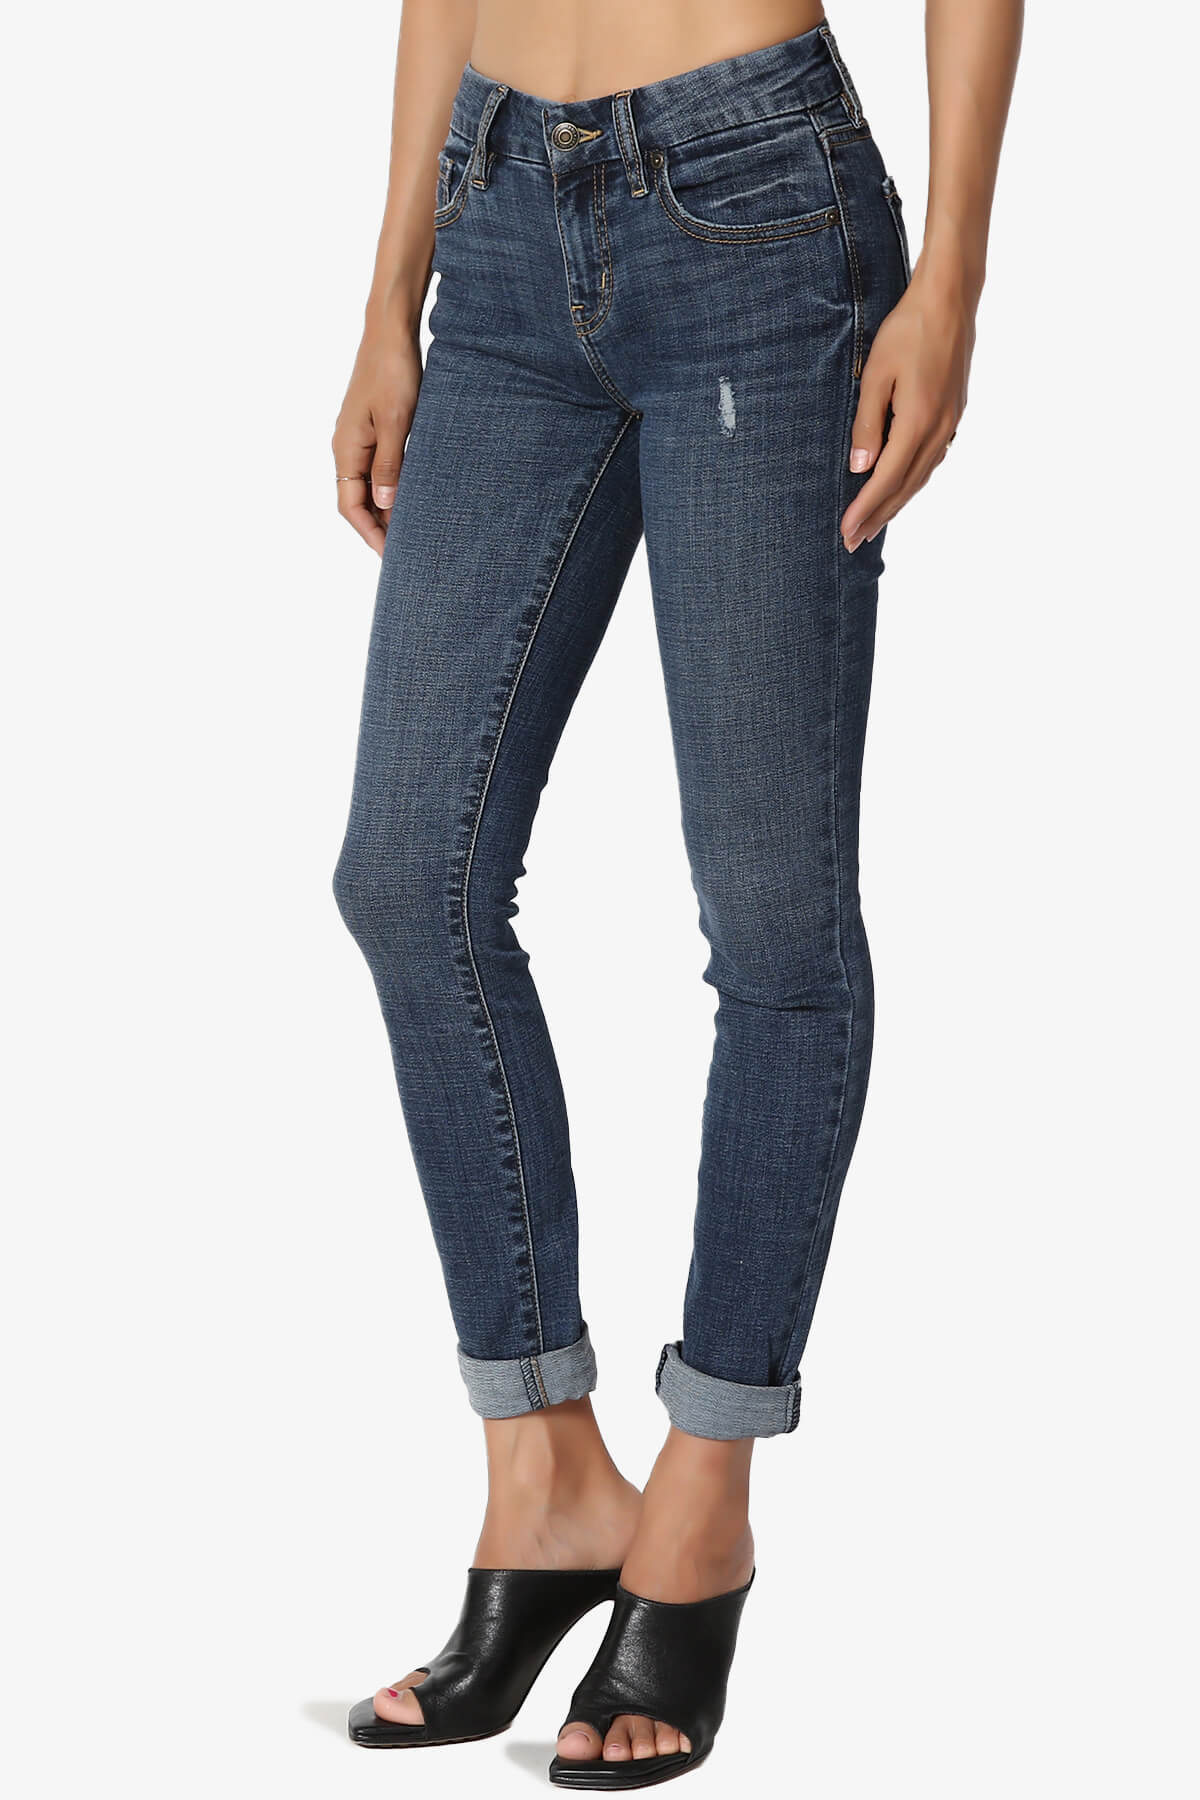 TheMogan Women's 0~3X Roll Up Mid Rise Dark Vintage Wash Tencel Denim Skinny Jeans - image 3 of 7